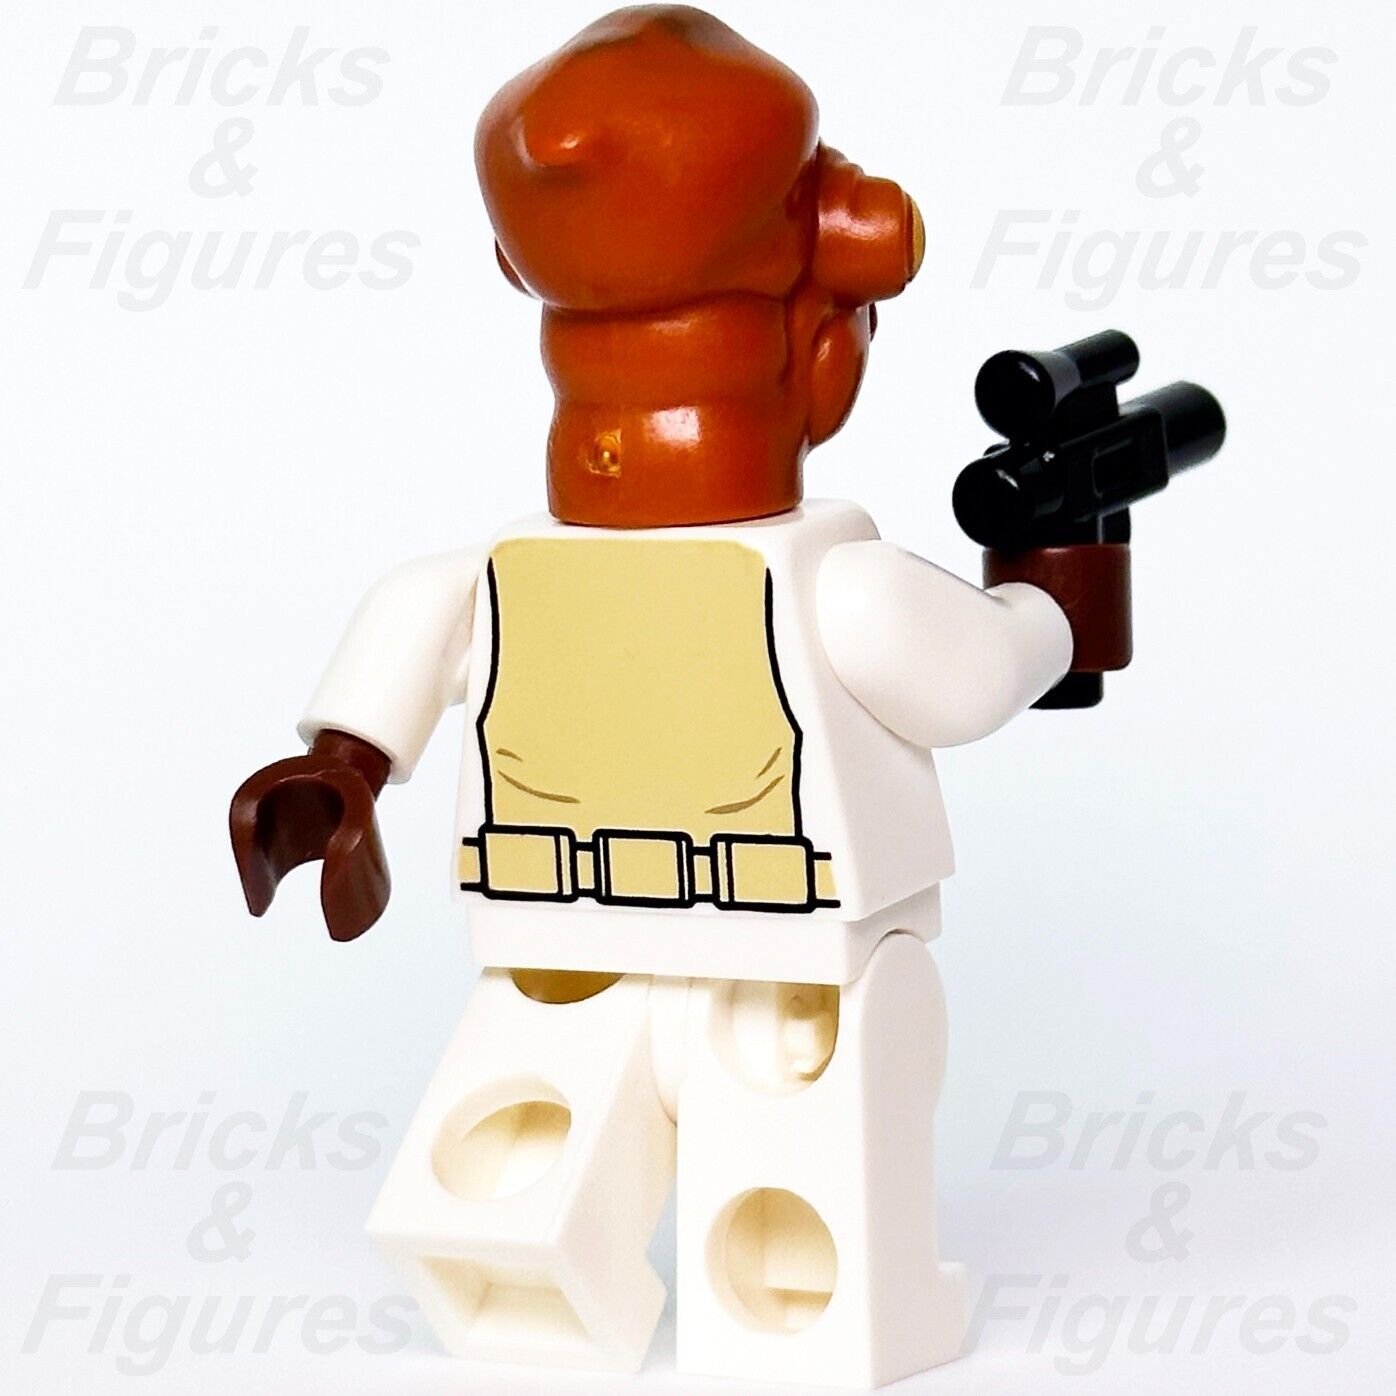 LEGO Star Wars Admiral Ackbar Minifigure Mon Calamari 75003 7754 sw0247 Minifig 3